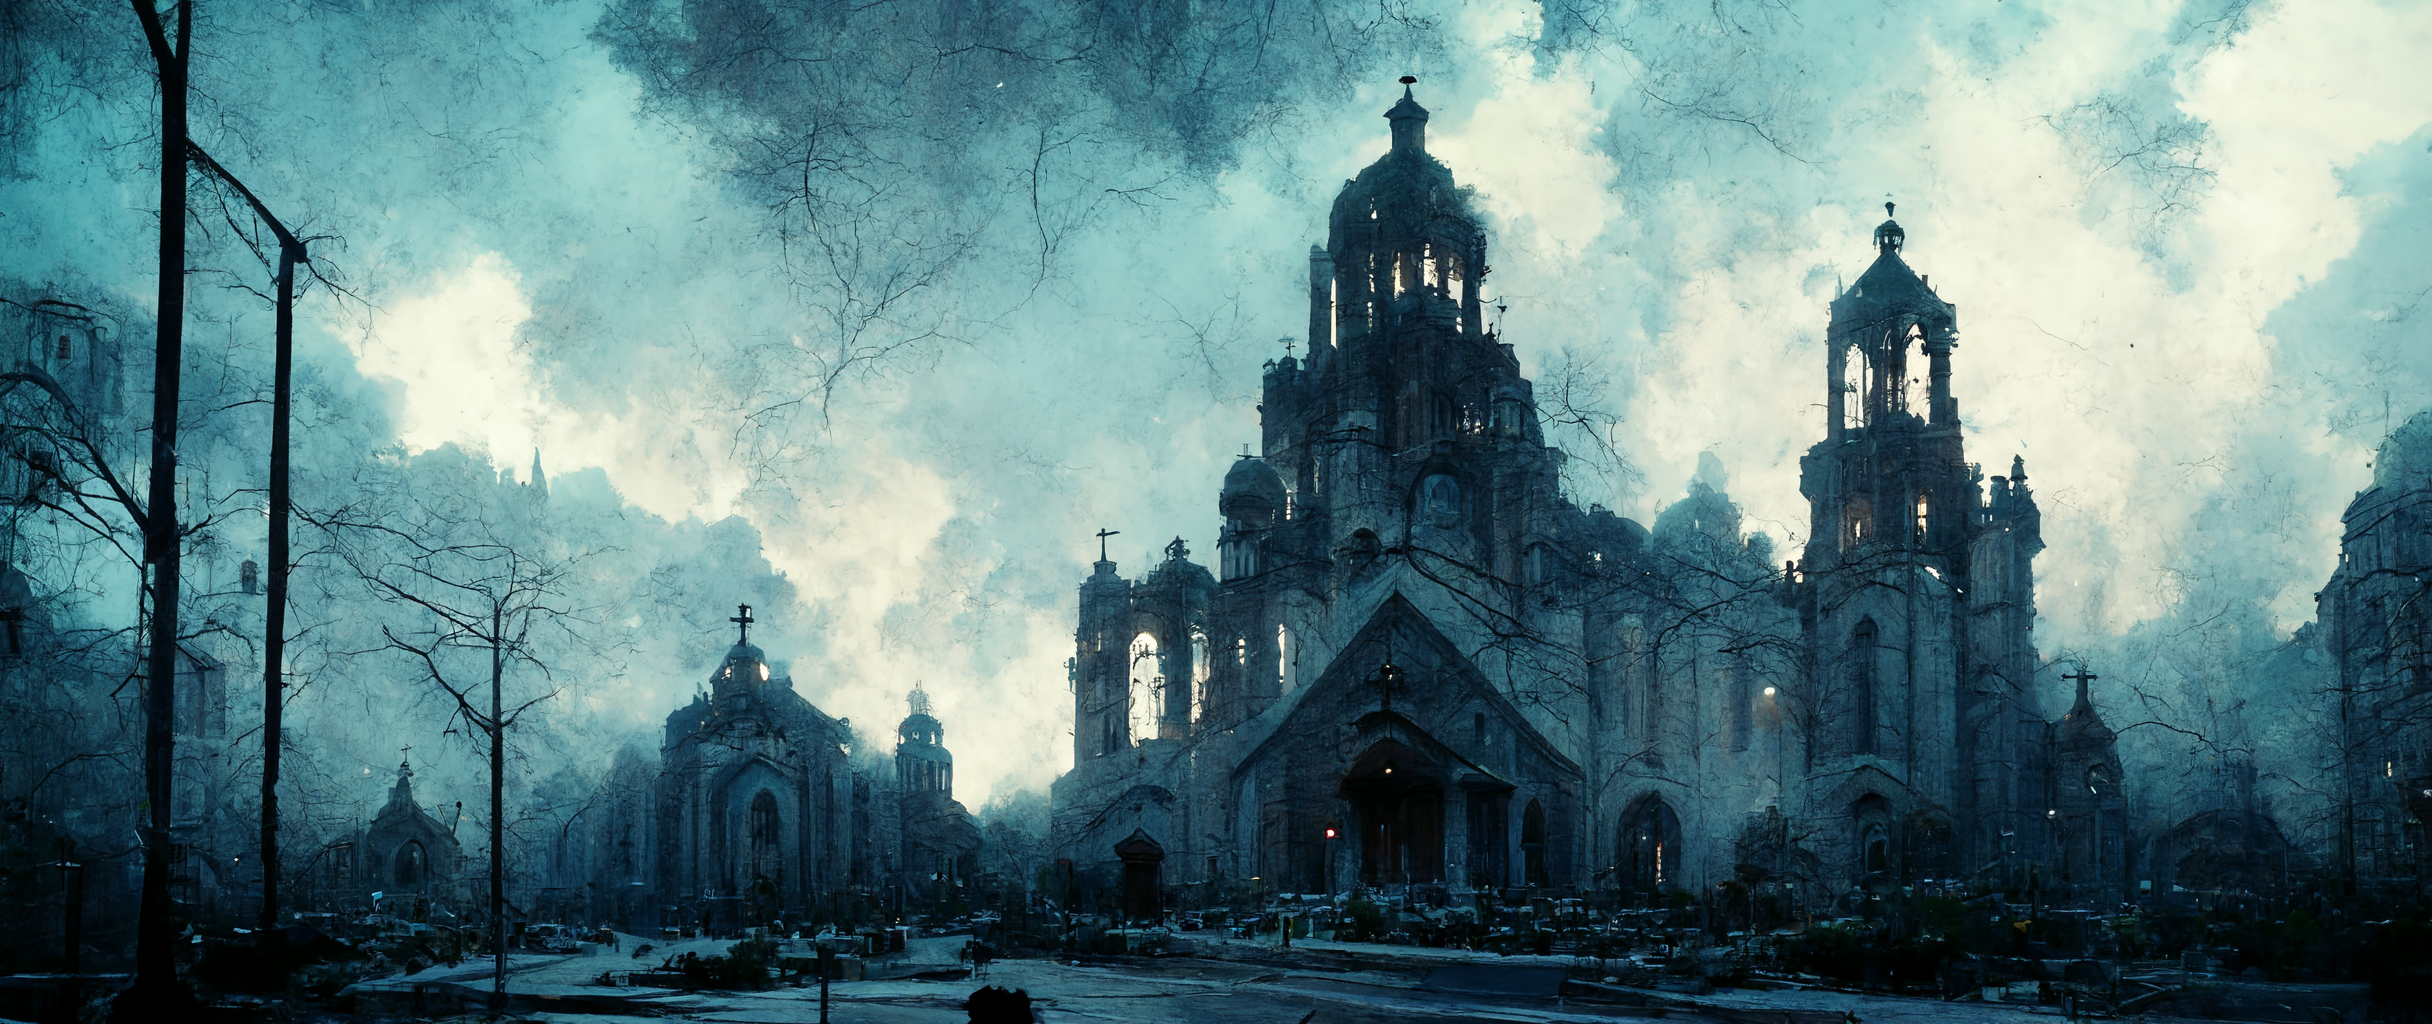 vibe_cathedral_interior_demons_night_spooky_photorealism_octane_ec618696-59b9-48de-bd0c-43890fcb9fa0